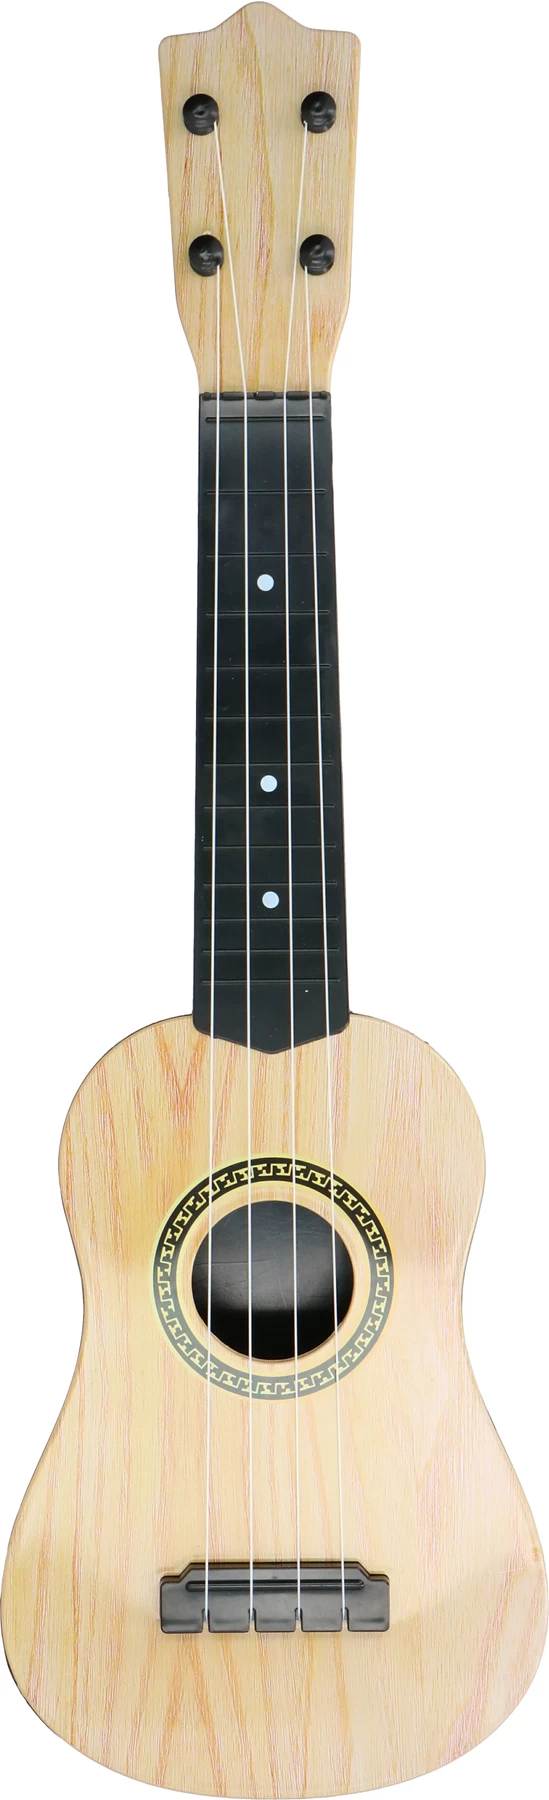 Gitara ukulele dla dzieci EDDY TOYS 57cm